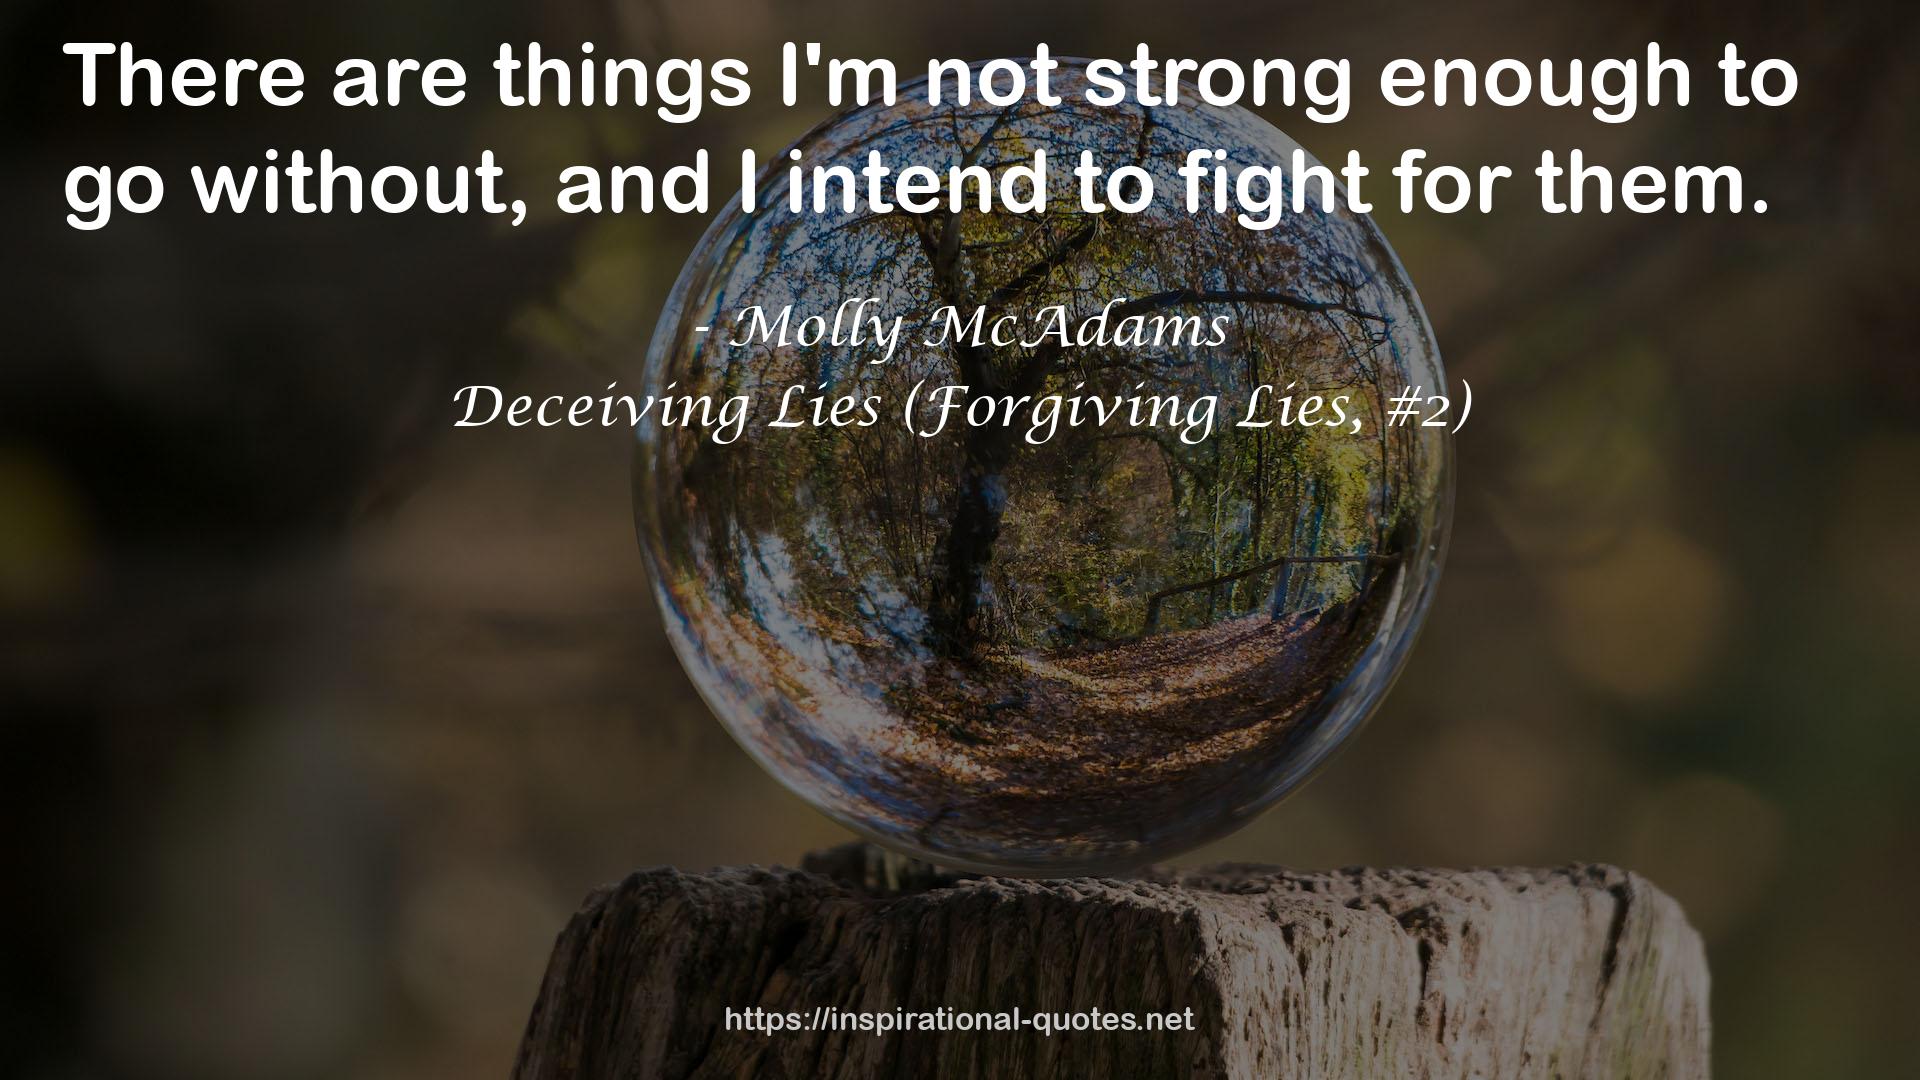 Deceiving Lies (Forgiving Lies, #2) QUOTES